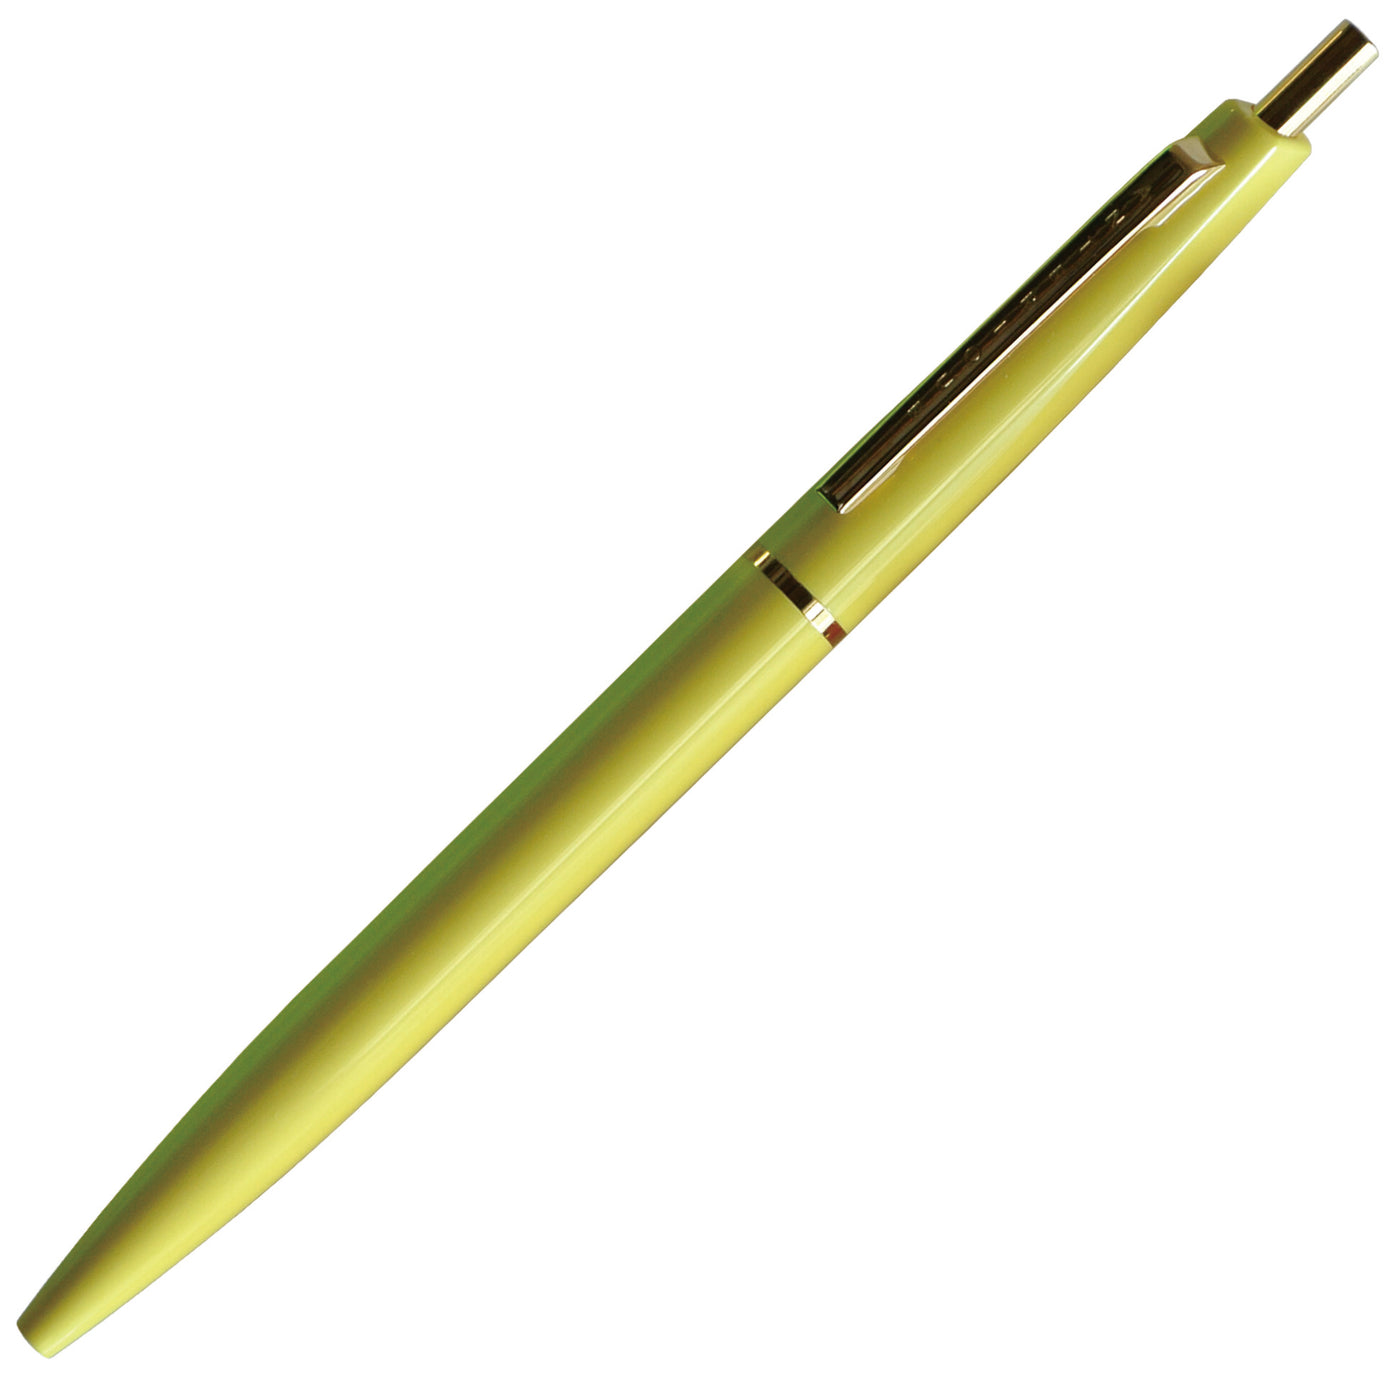 Anterique 0.5mm Mach Ball Ink Pen